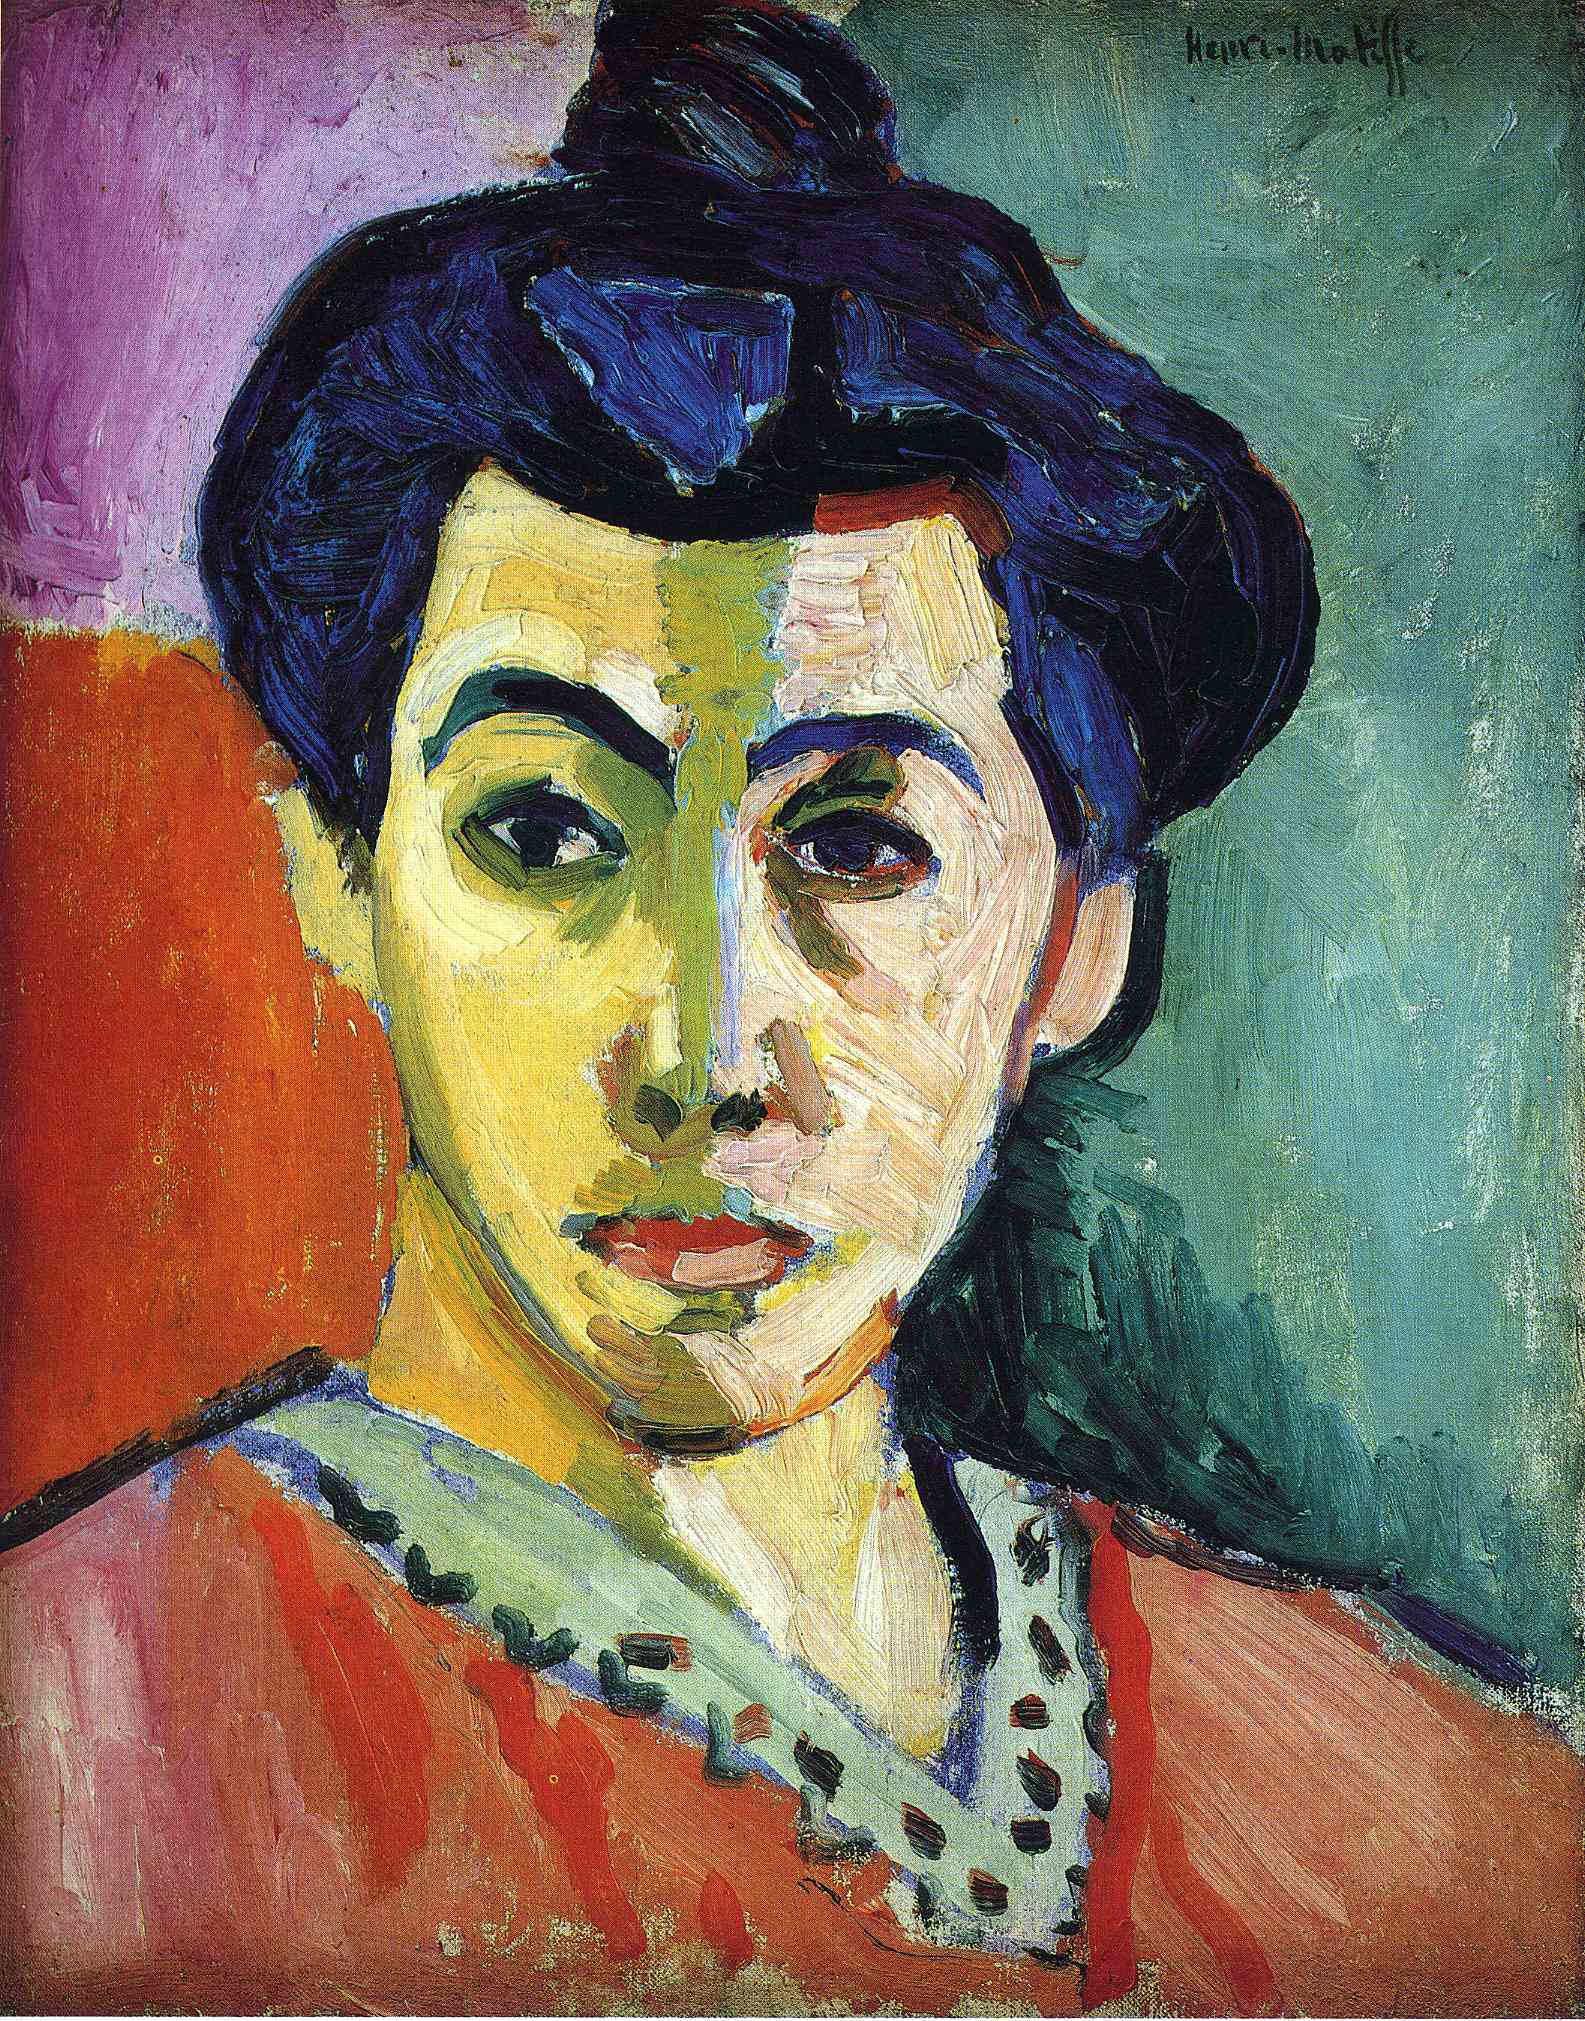 http://www.wikiart.org/en/henri-matisse/portrait-of-madame-matisse-green-stripe-1905